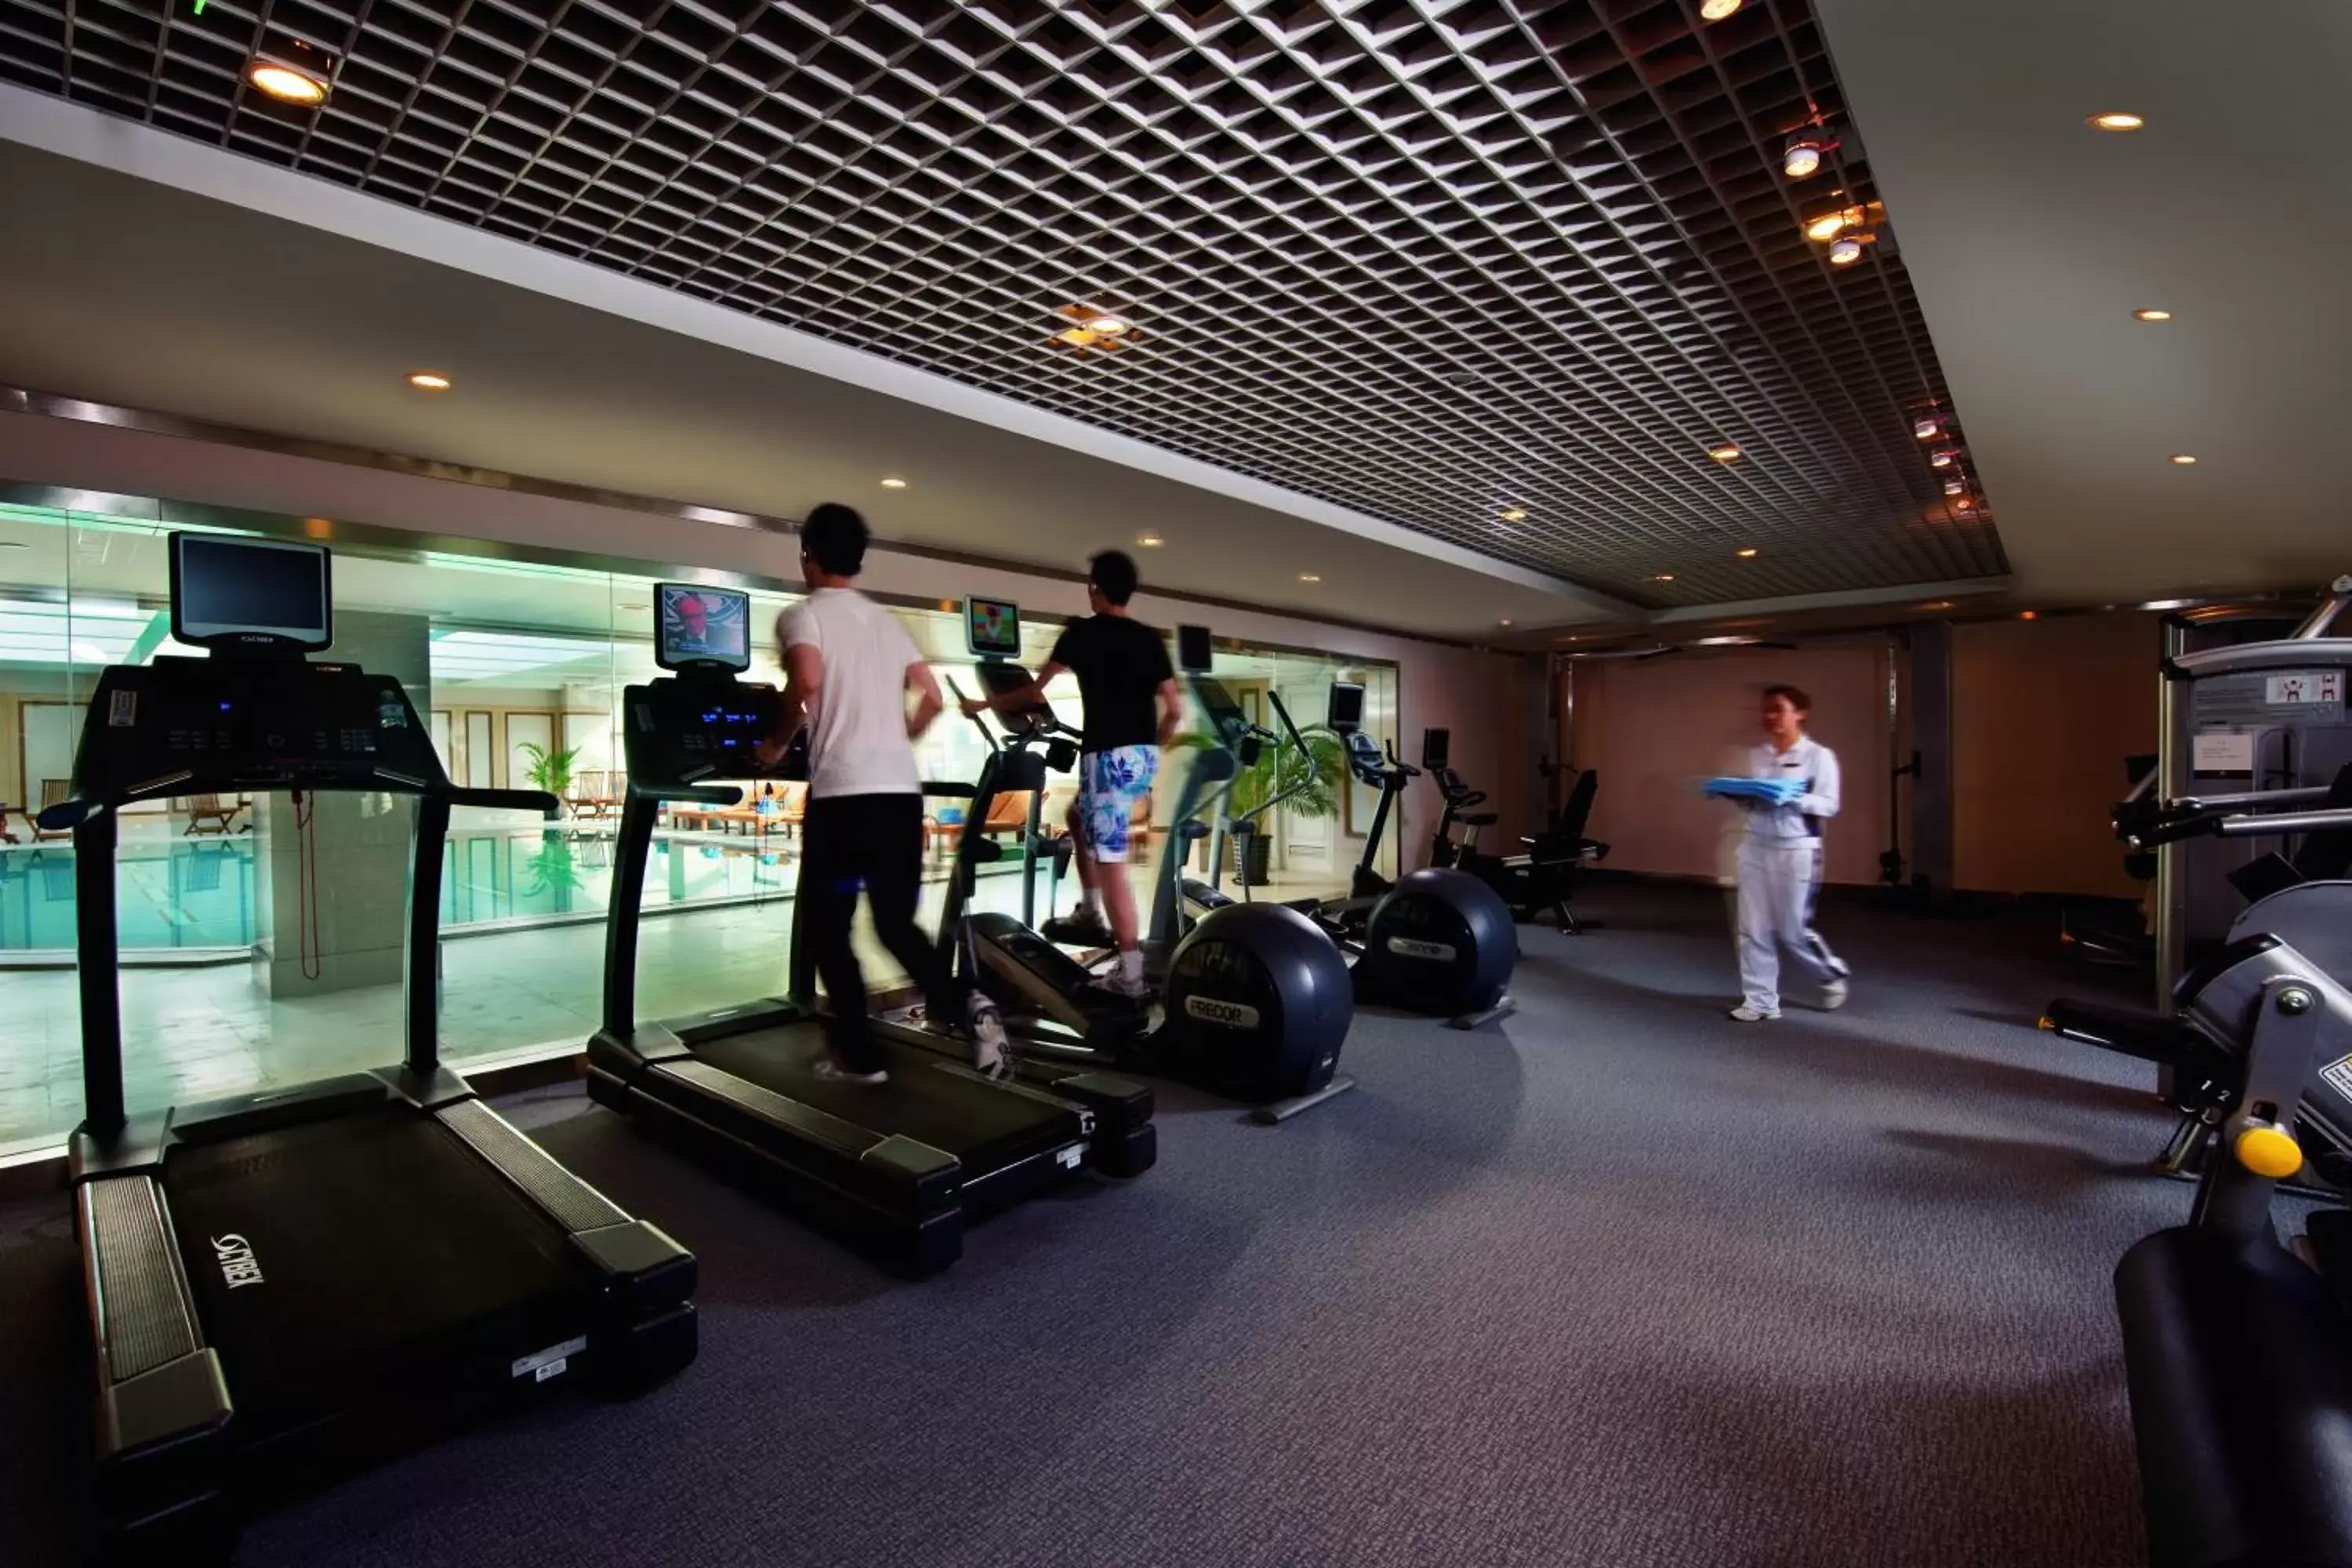 Fitness centre/facilities, Fitness Center/Facilities in Sunworld Dynasty Hotel Beijing Wangfujing